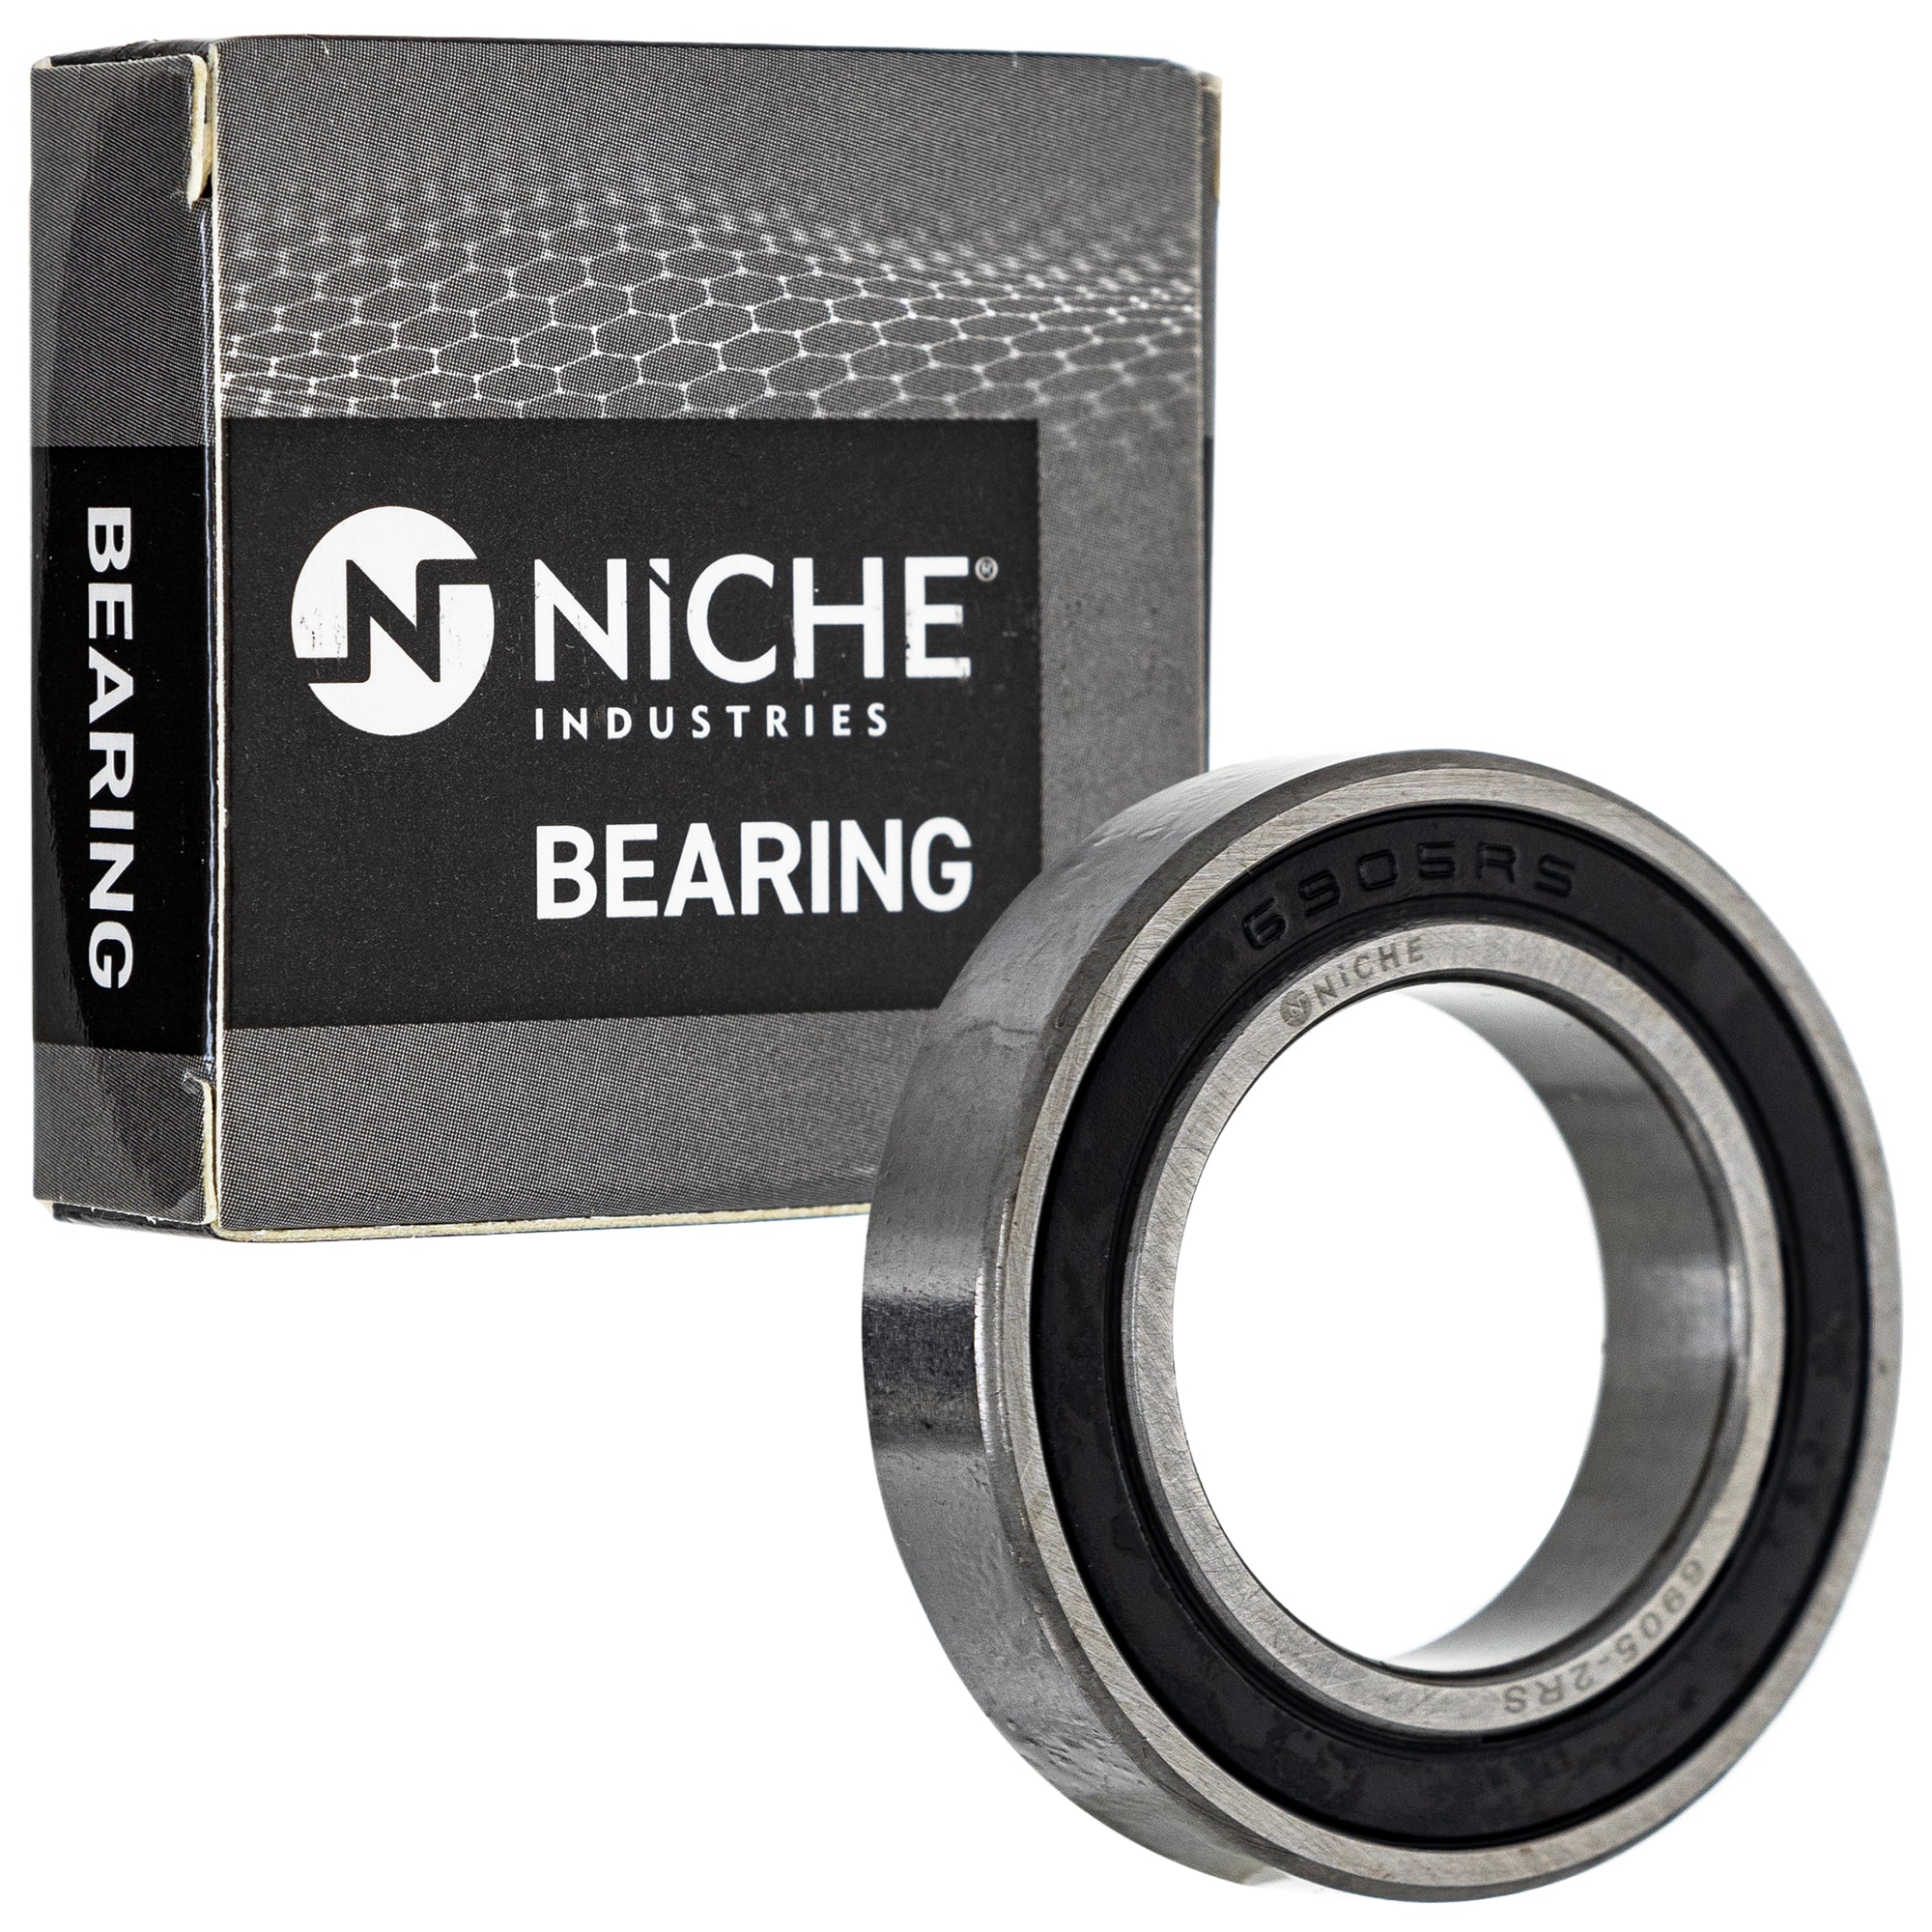 NICHE 519-CBB2251R Bearing for zOTHER ZZR600 Zephyr Z1000 YZ450F